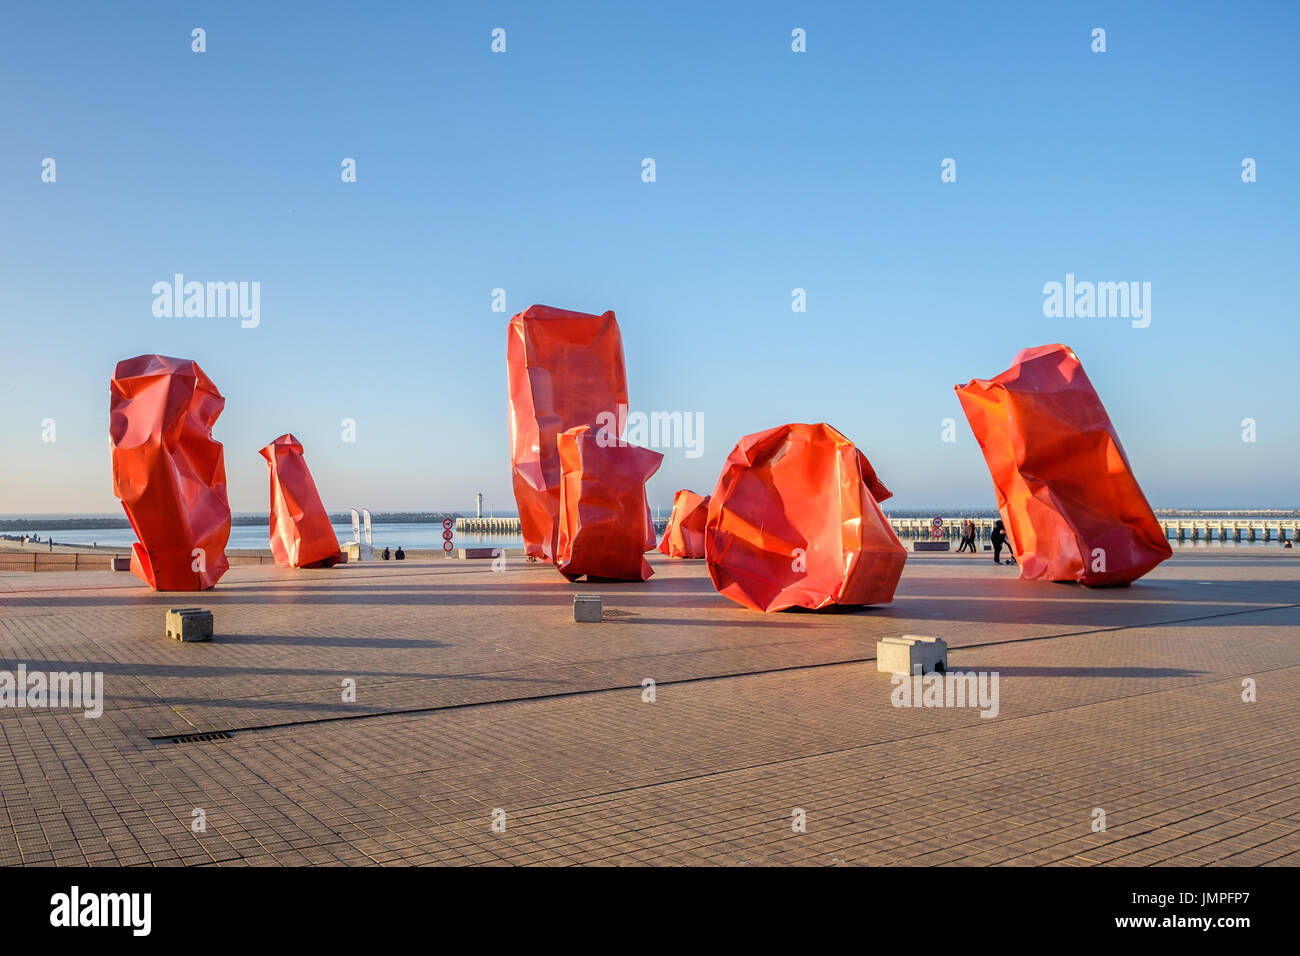 Contextual view of artwork 'Rock Strangers' near the beach, Sunday 2 April 2017, Oostende, Belgium. Stock Photo